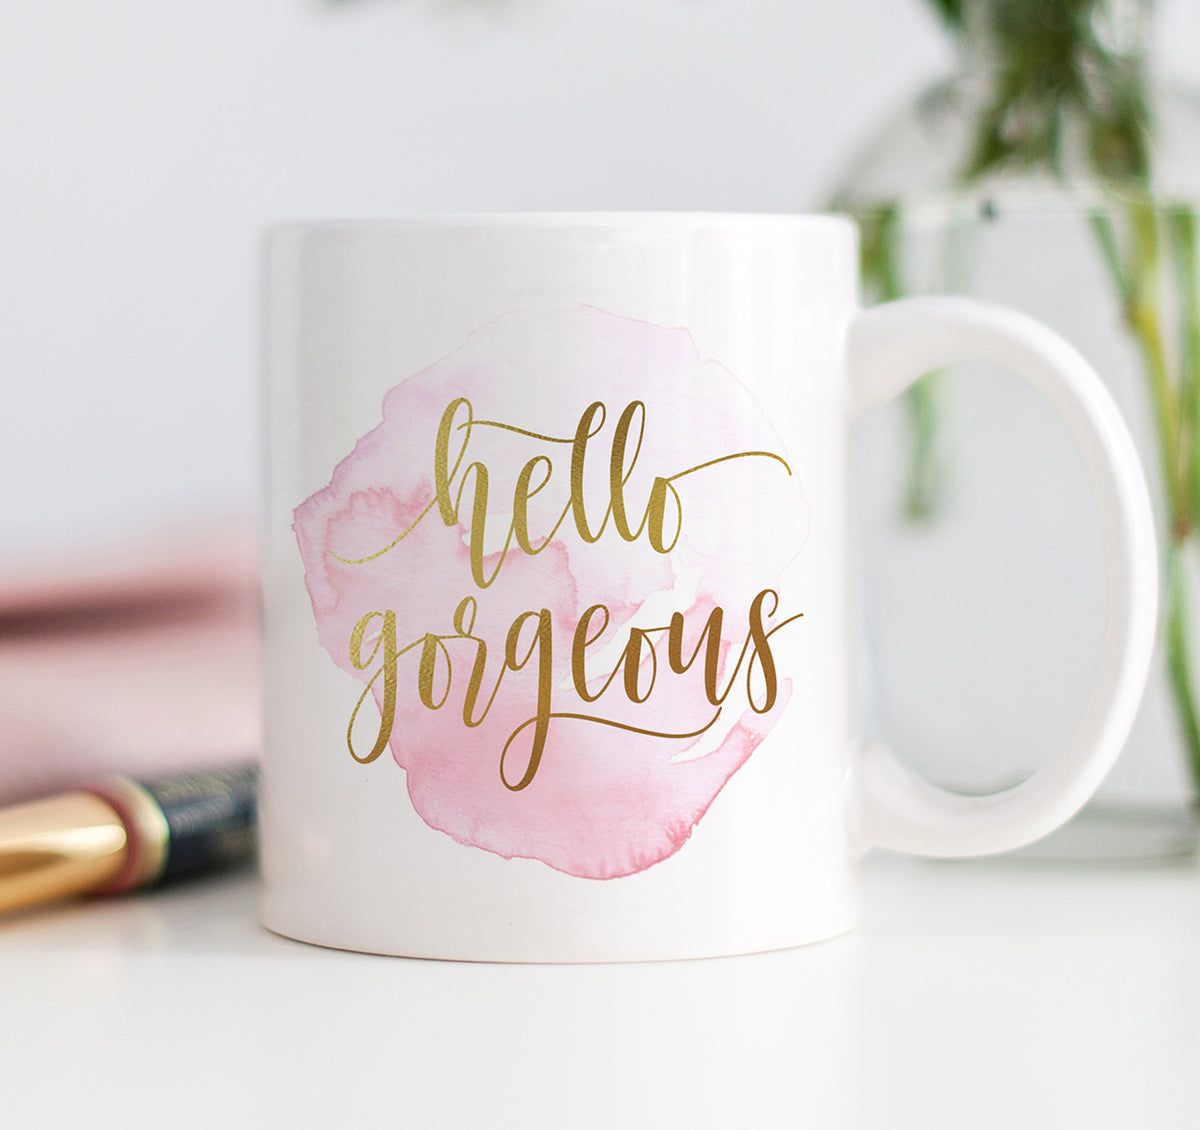 Hello Beautiful Coffee Mug for Women - Cute Rose Pink and Gold Cups & –  Island Dog T-Shirt Company